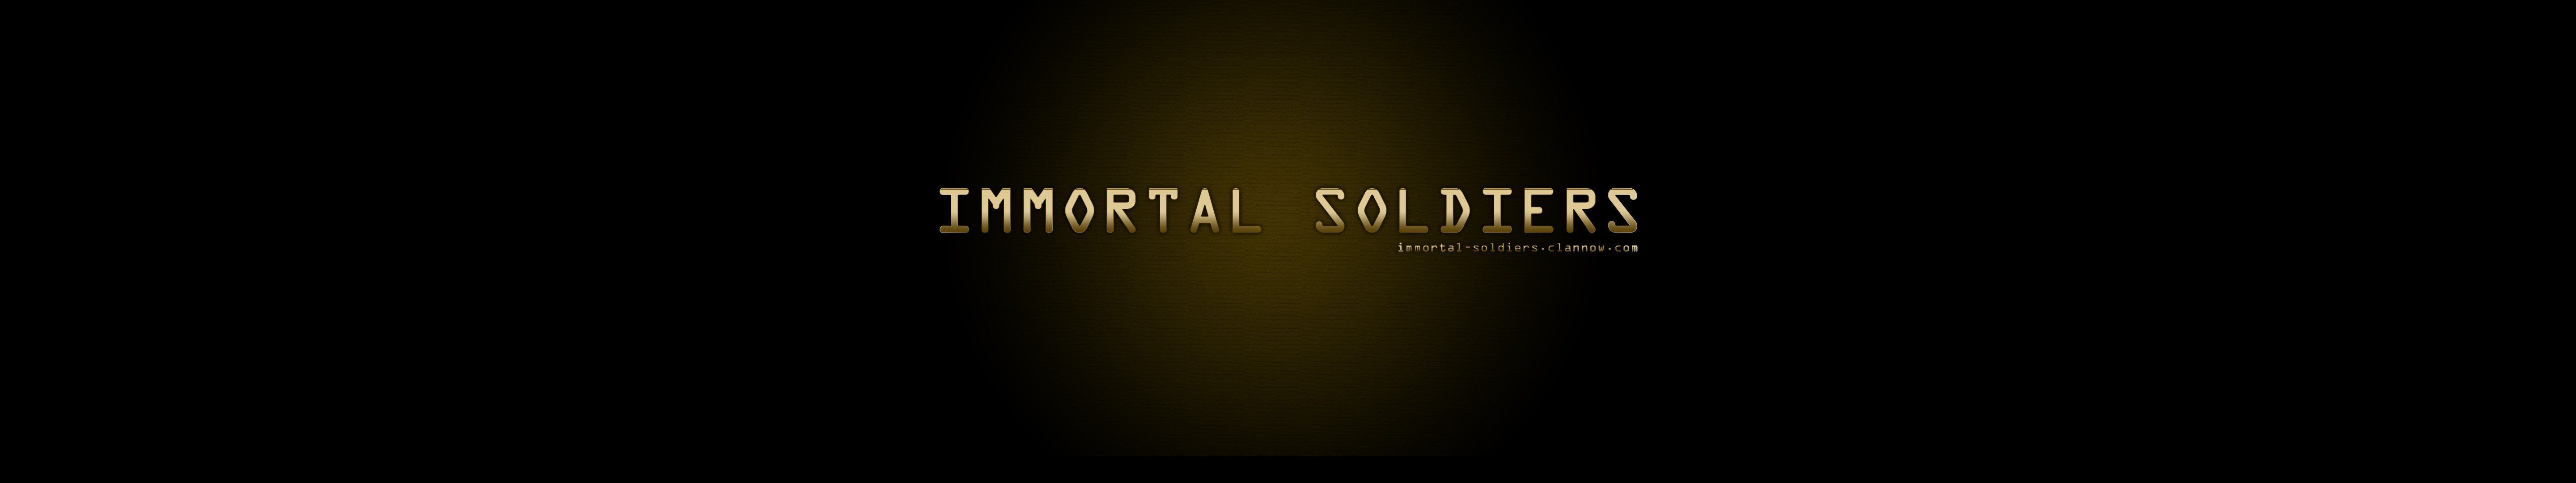 Soldiers immortal multiscreen wallpaper | 5760x1080 | 244422 ...